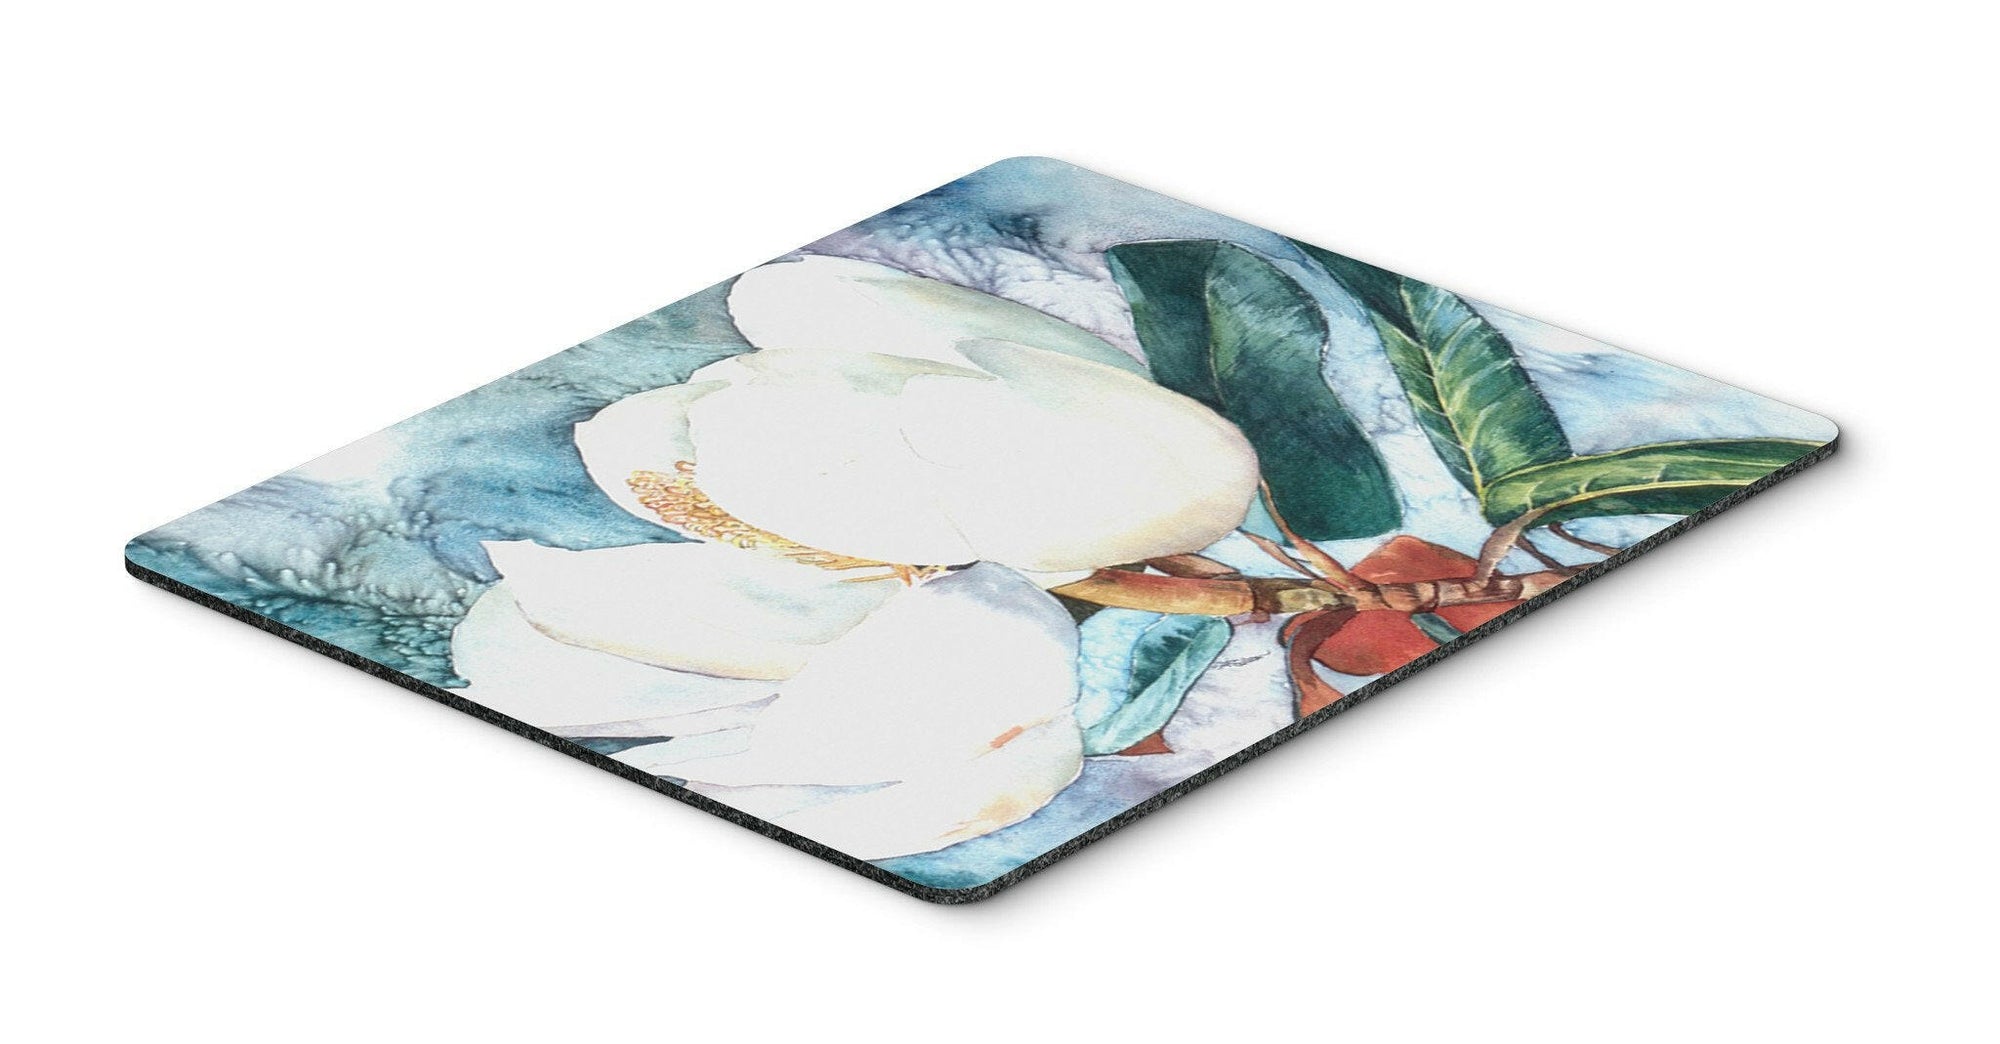 Flower - Magnolia Mouse pad, hot pad, or trivet by Caroline's Treasures